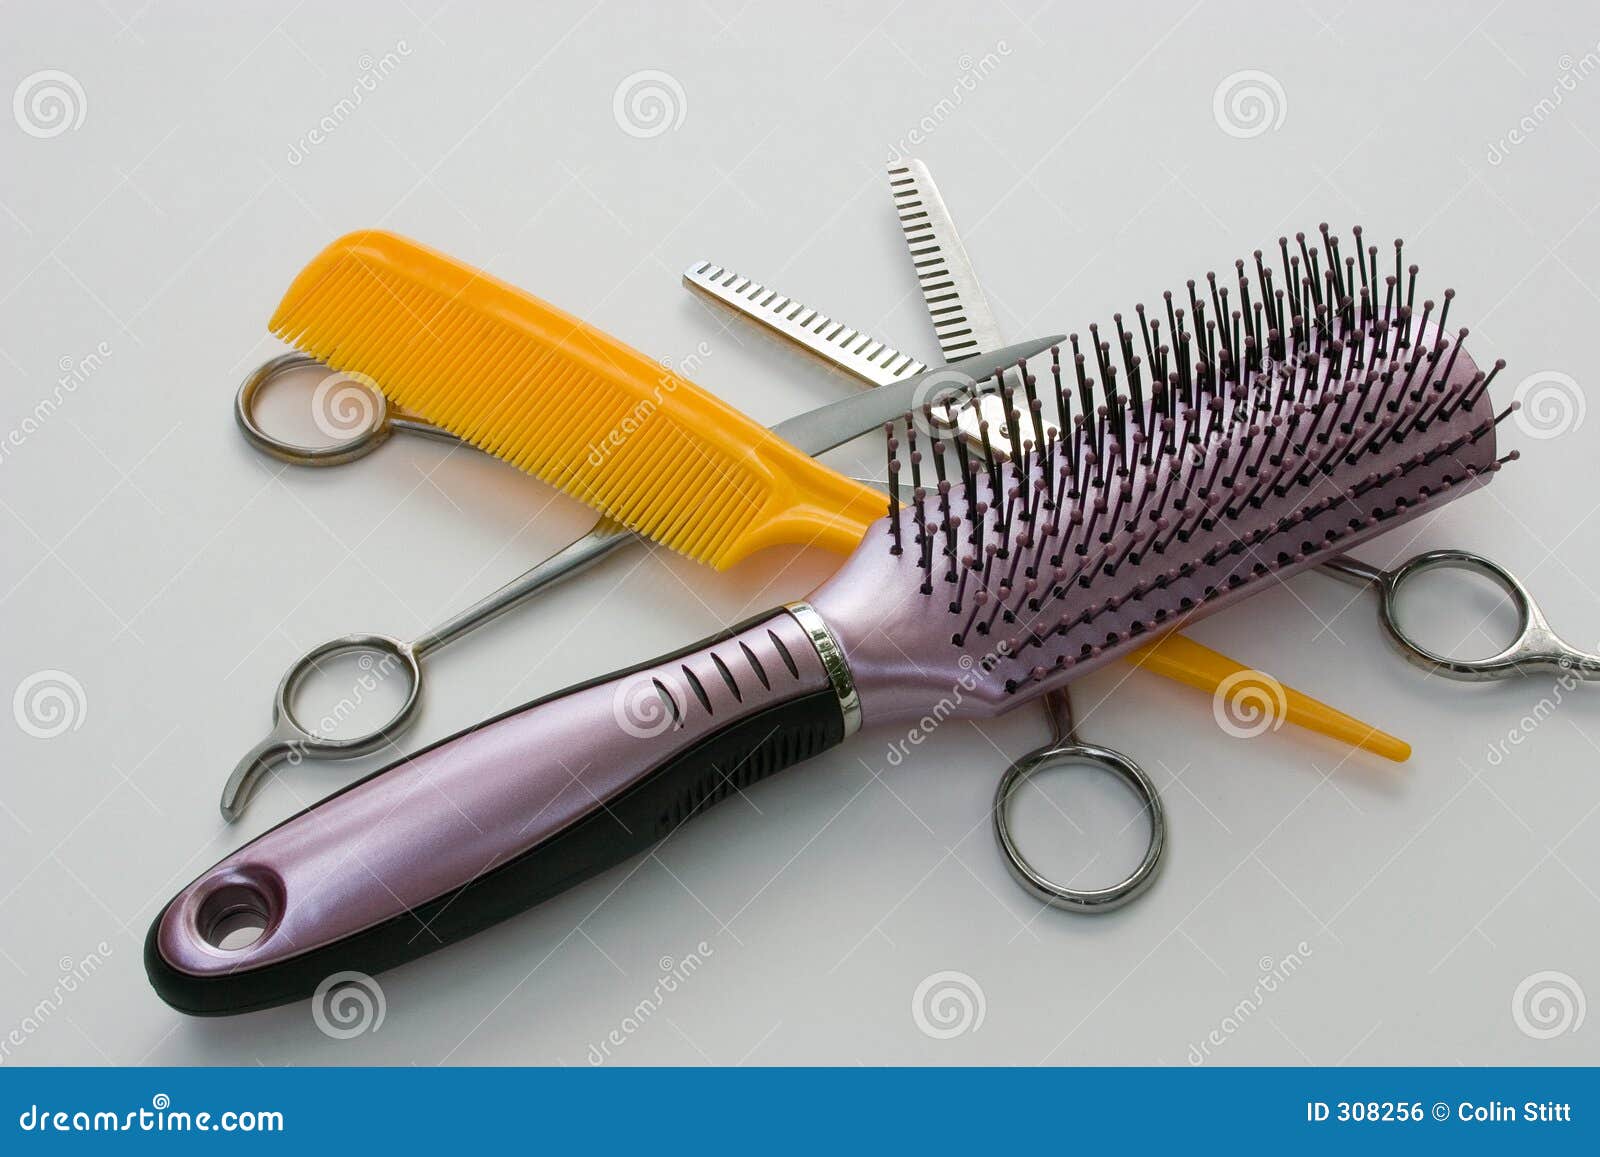 Hair care 1 stock photo. Image of bathroom, scissors, comb - 308256